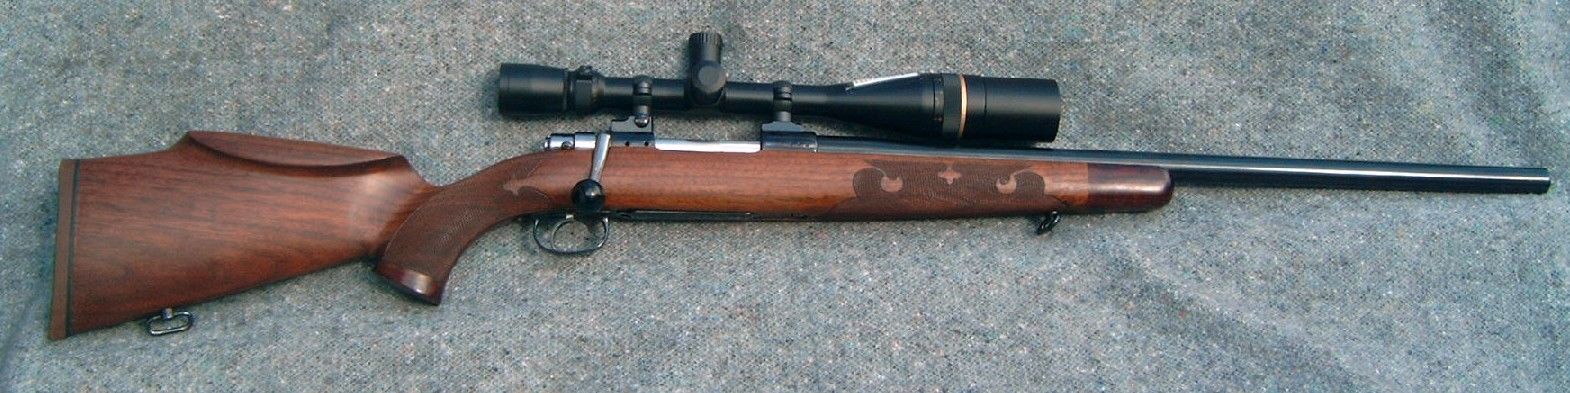 Fox Terminator
Mauser 98 -  cal. .220 Swift
Leupold Vari Xlll 6,5-20x40
Stok made of Walnut
